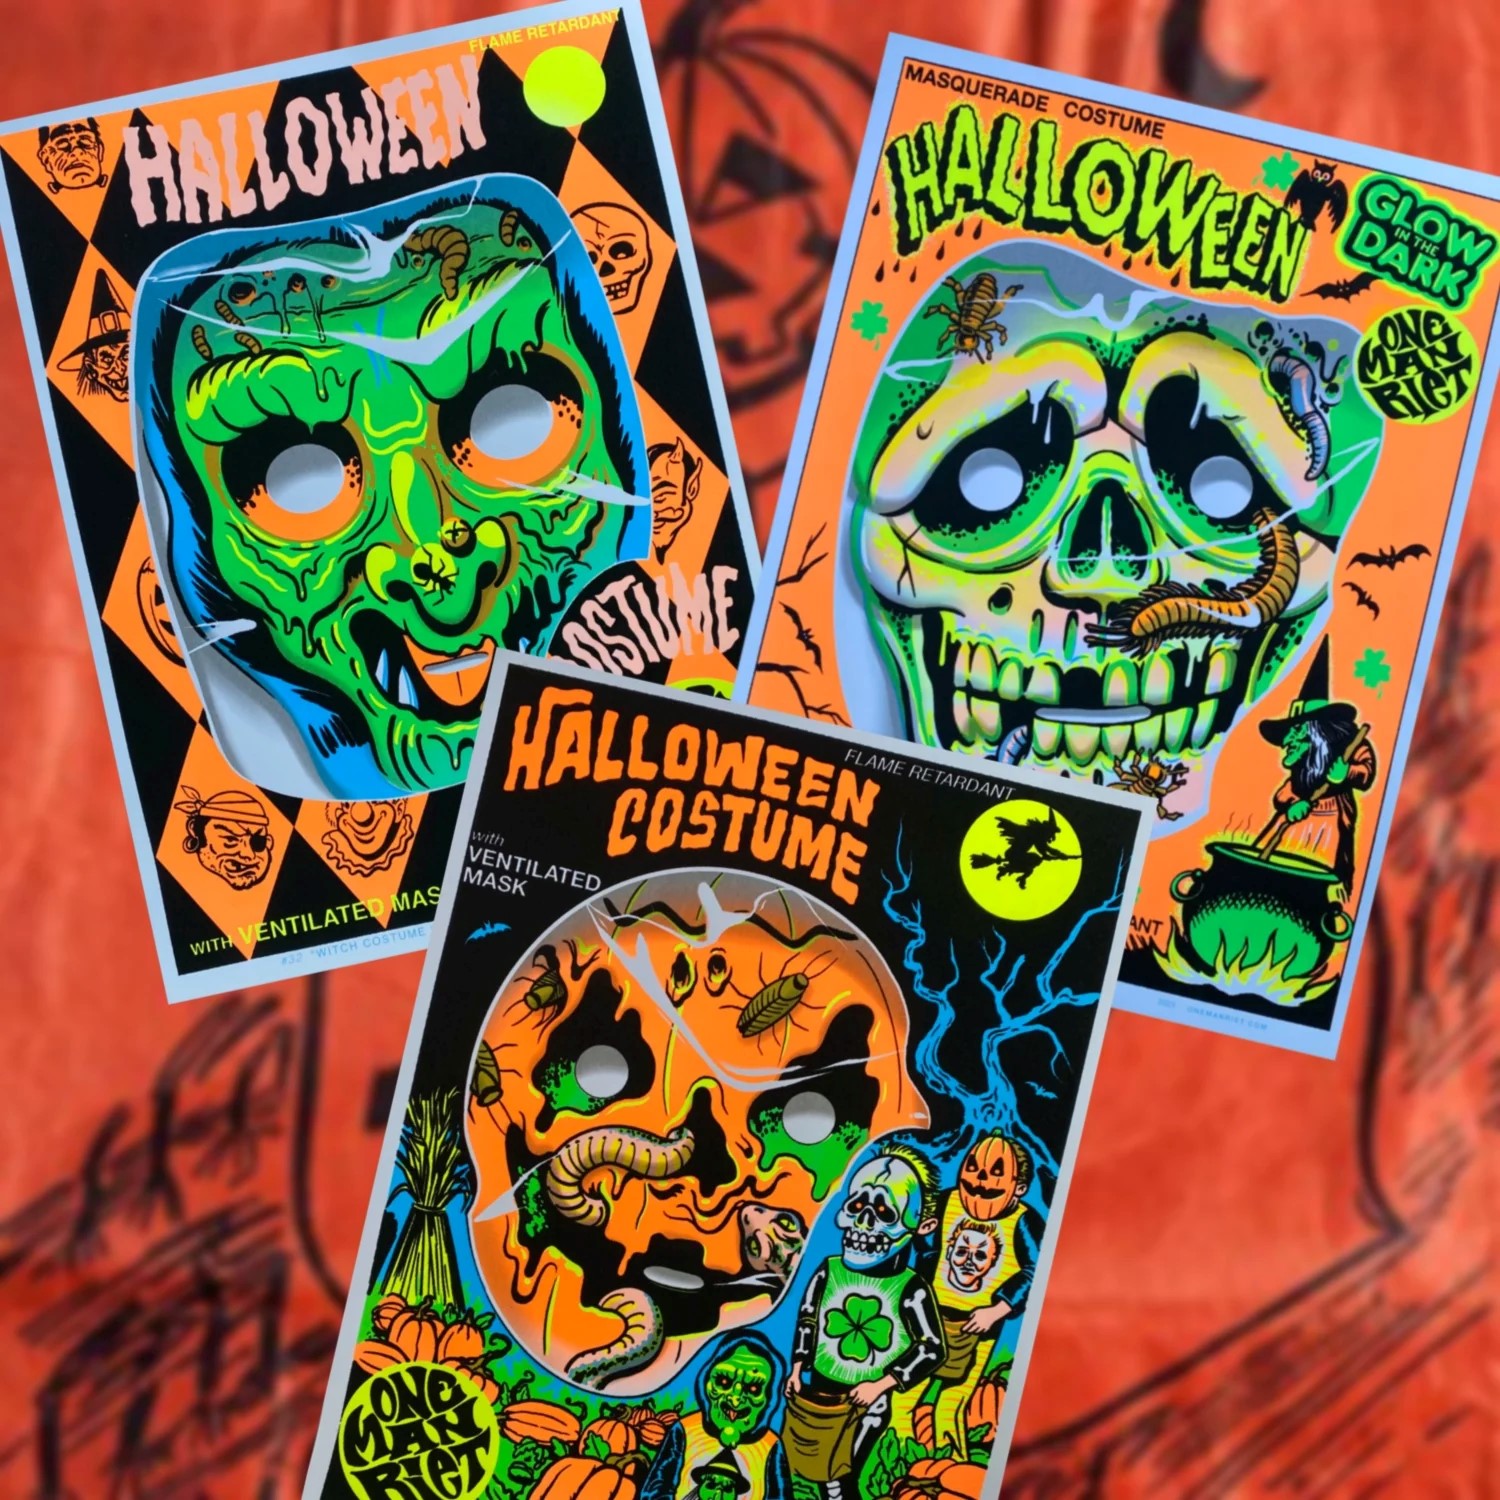 Halloween III Silver Shamrock Pumpkin Mask With Glow In The Dark